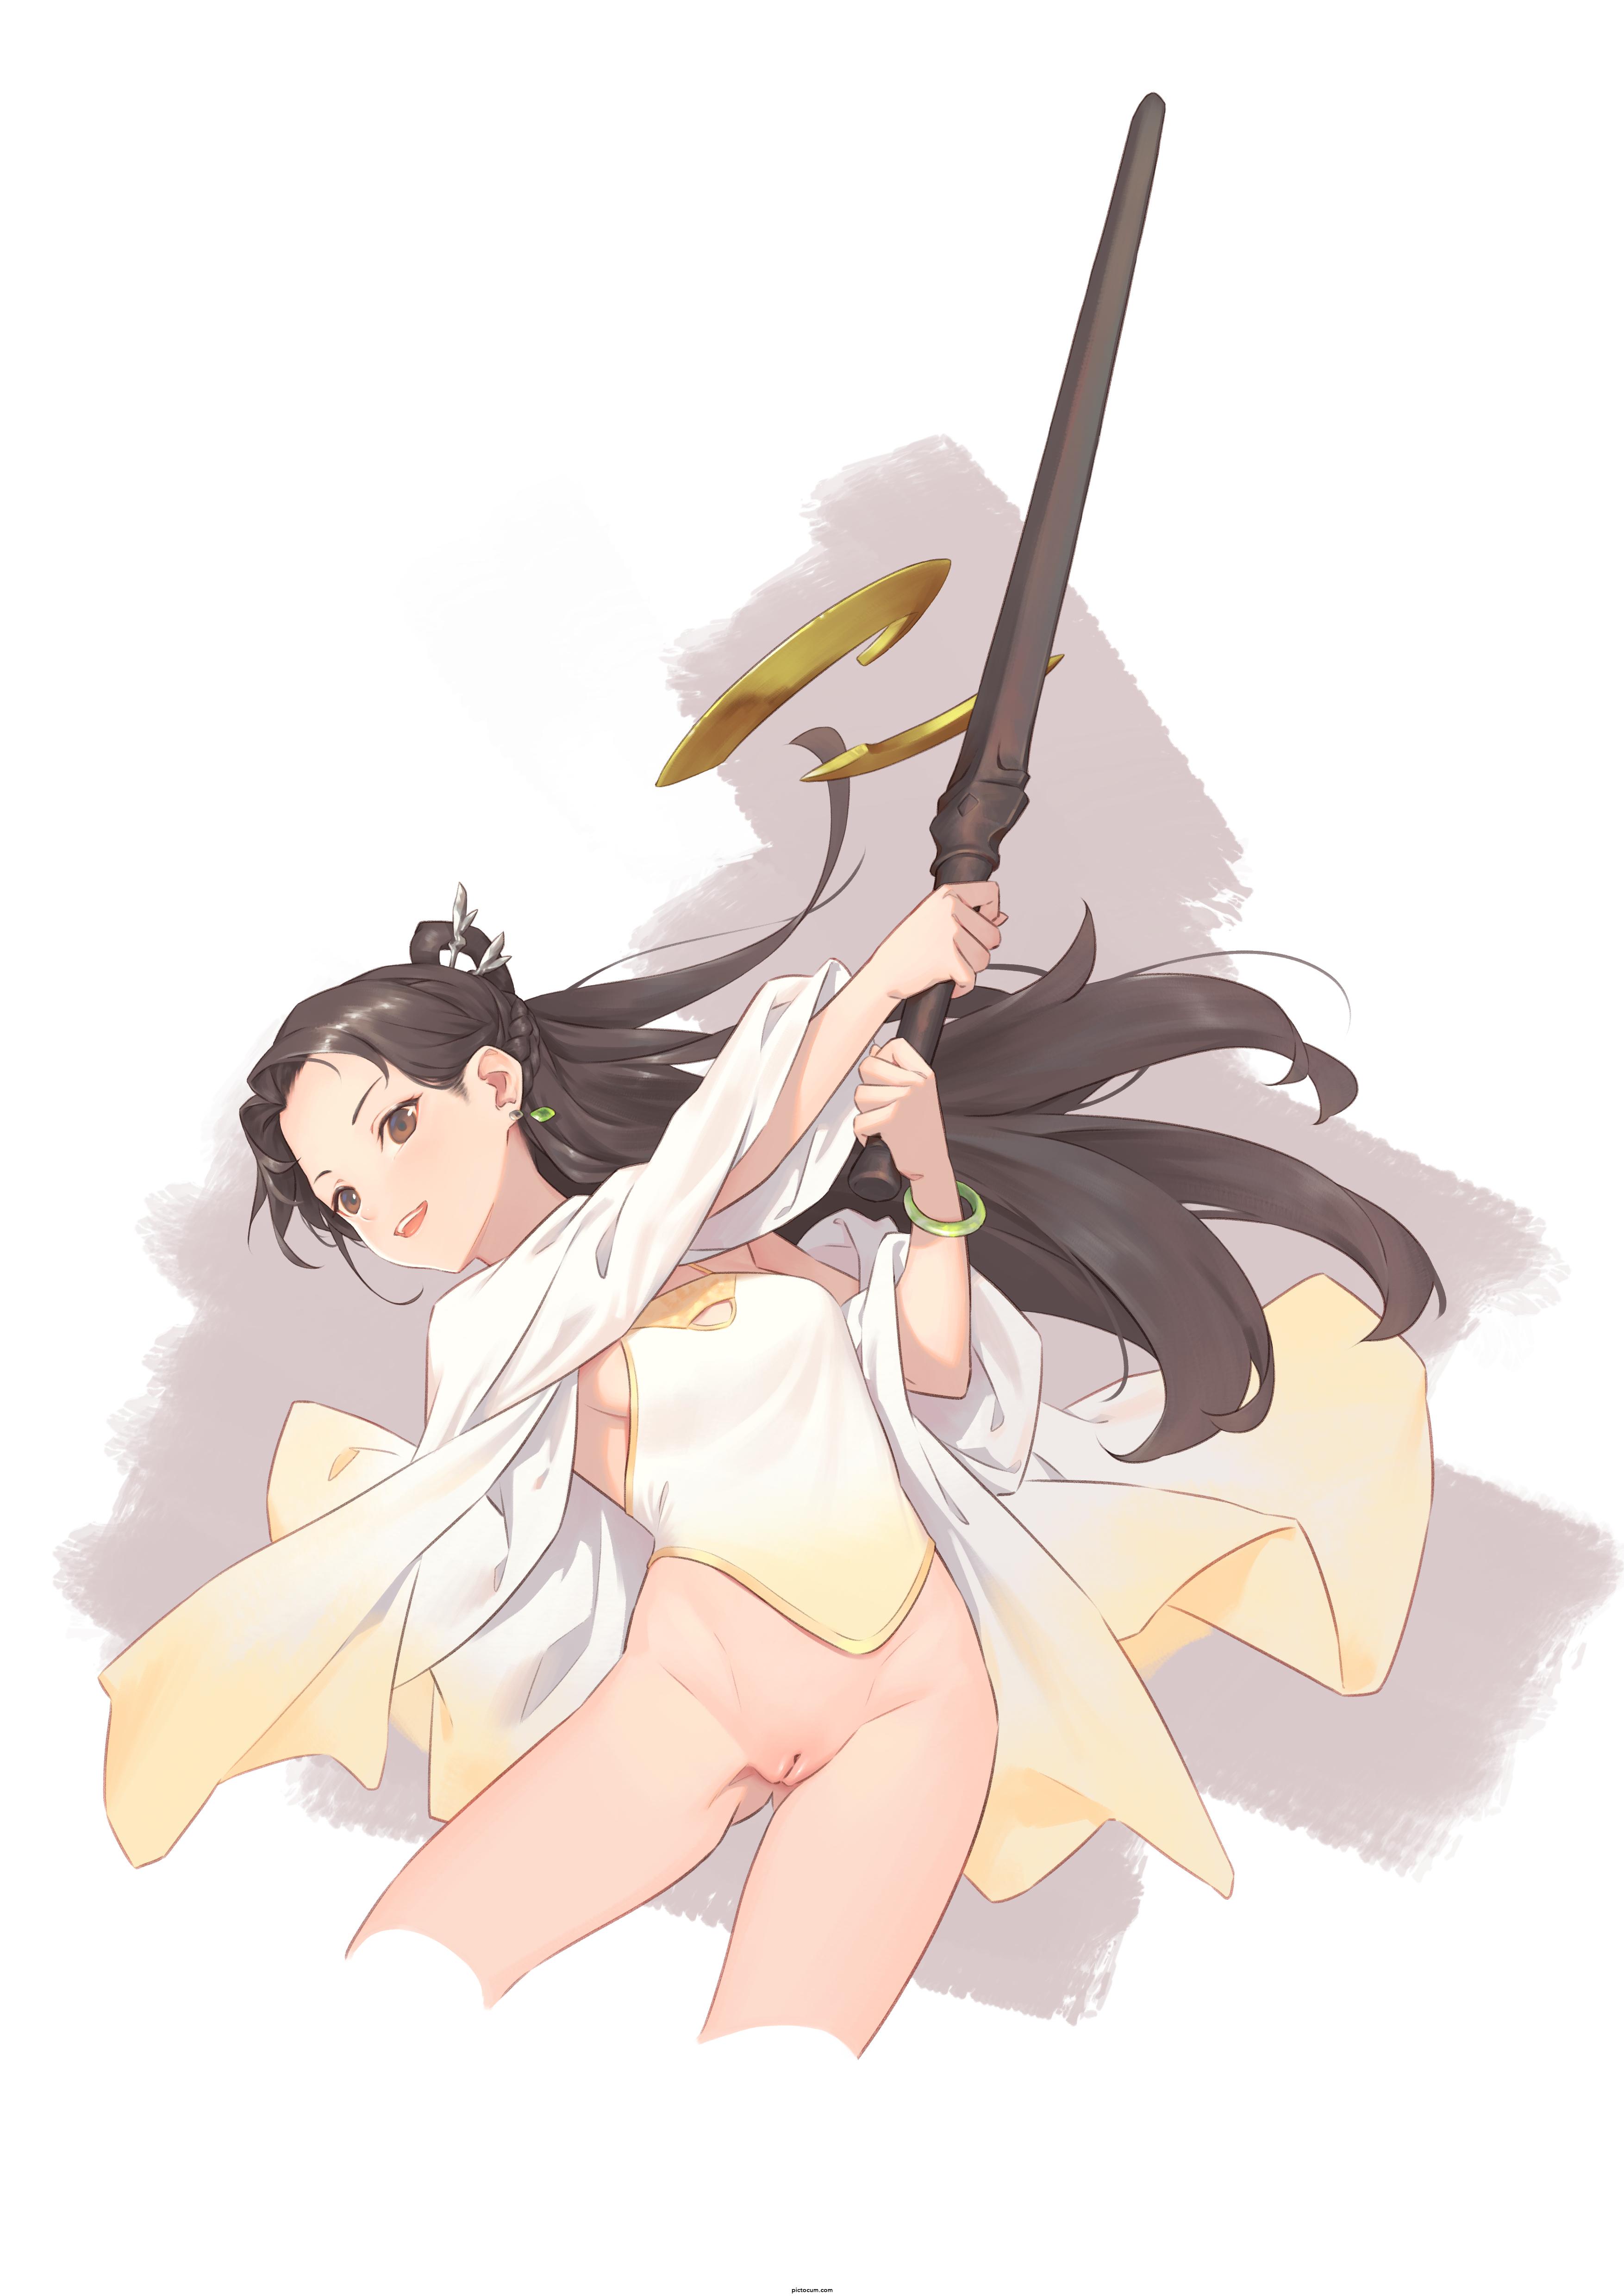 Swordswoman in white